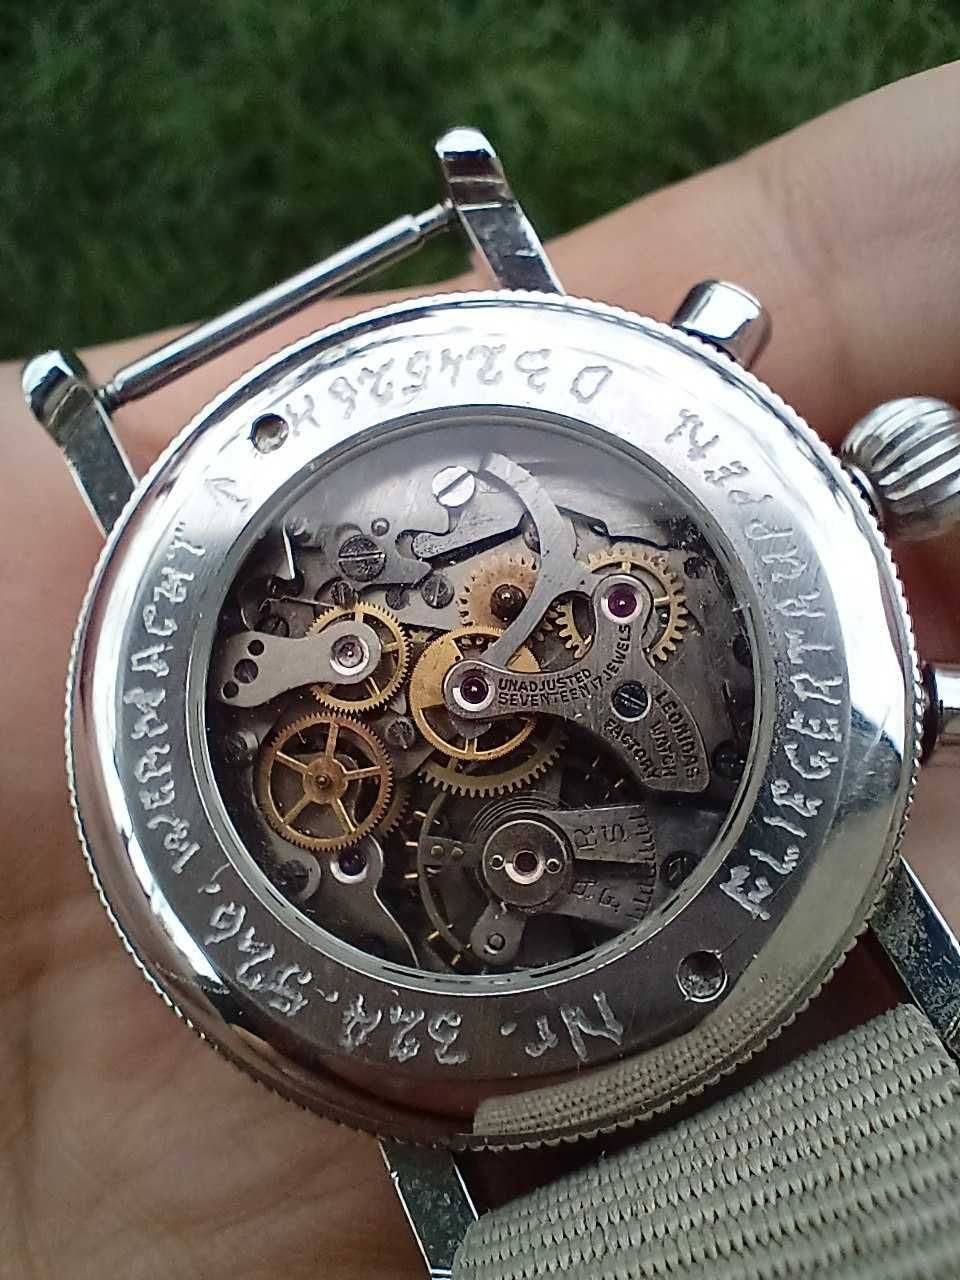 Zegarek Chronograf Leonidas